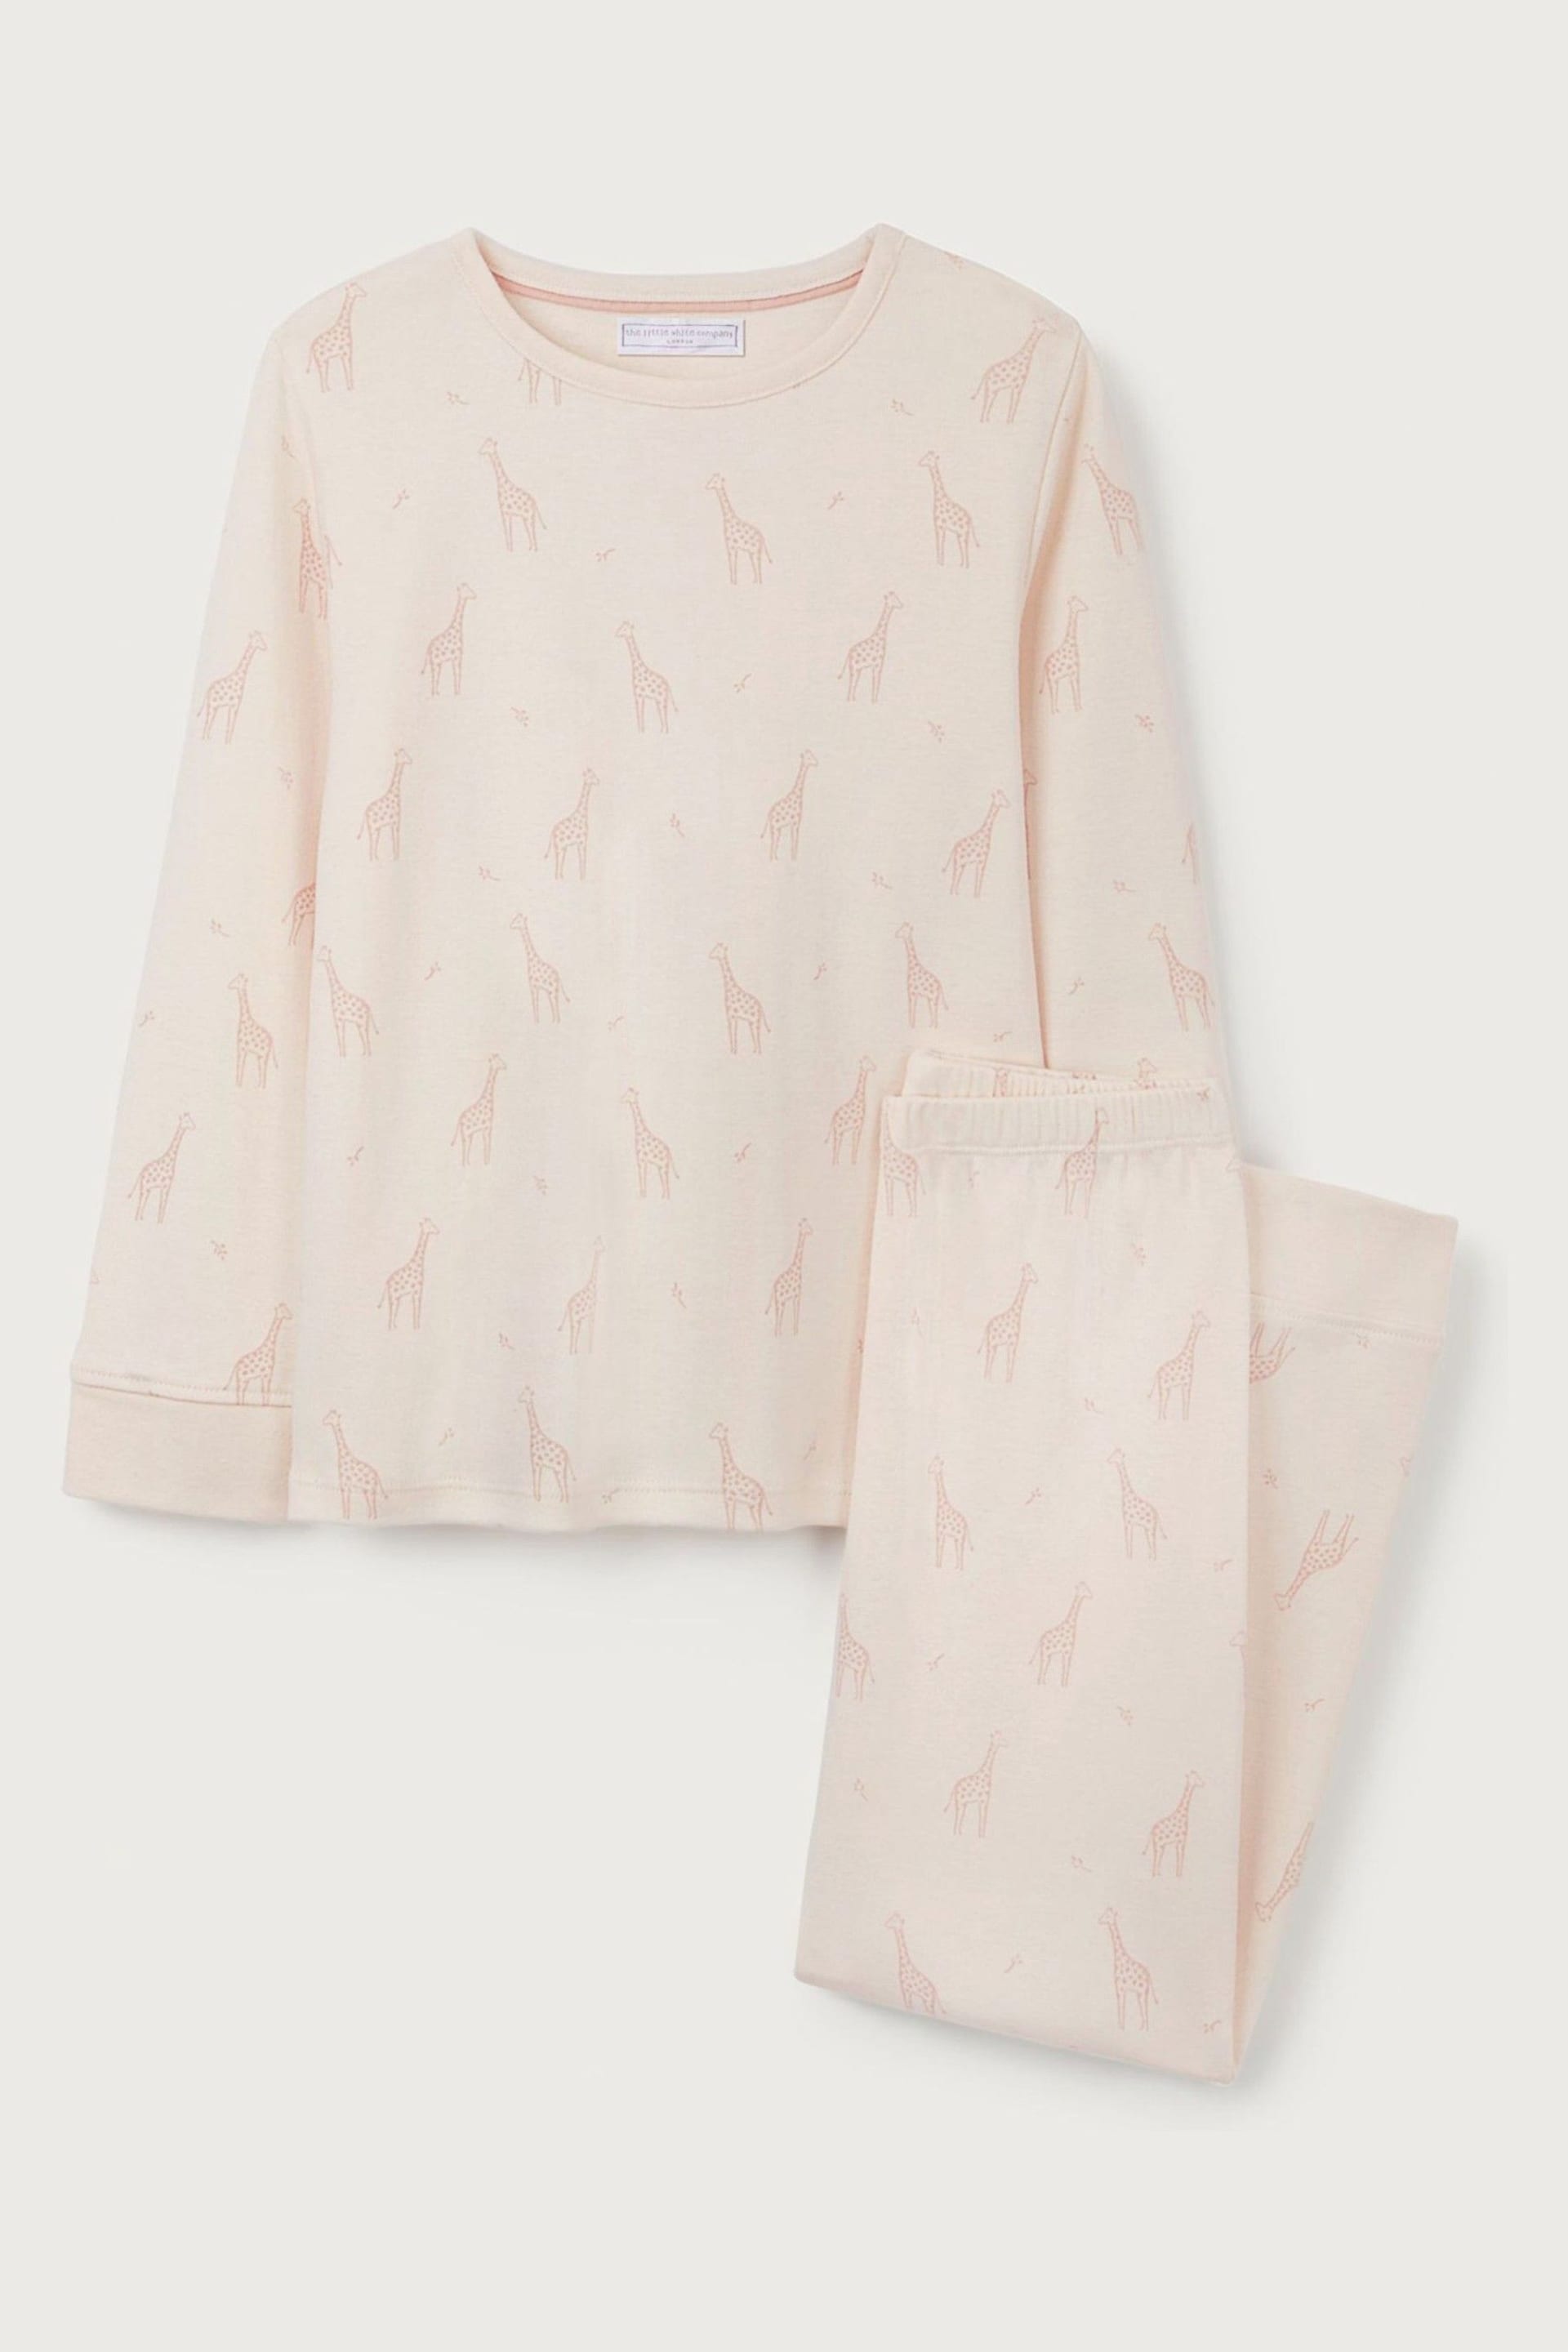 The White Company Pink Organic Cotton Giraffe Print Pyjama - Image 5 of 6